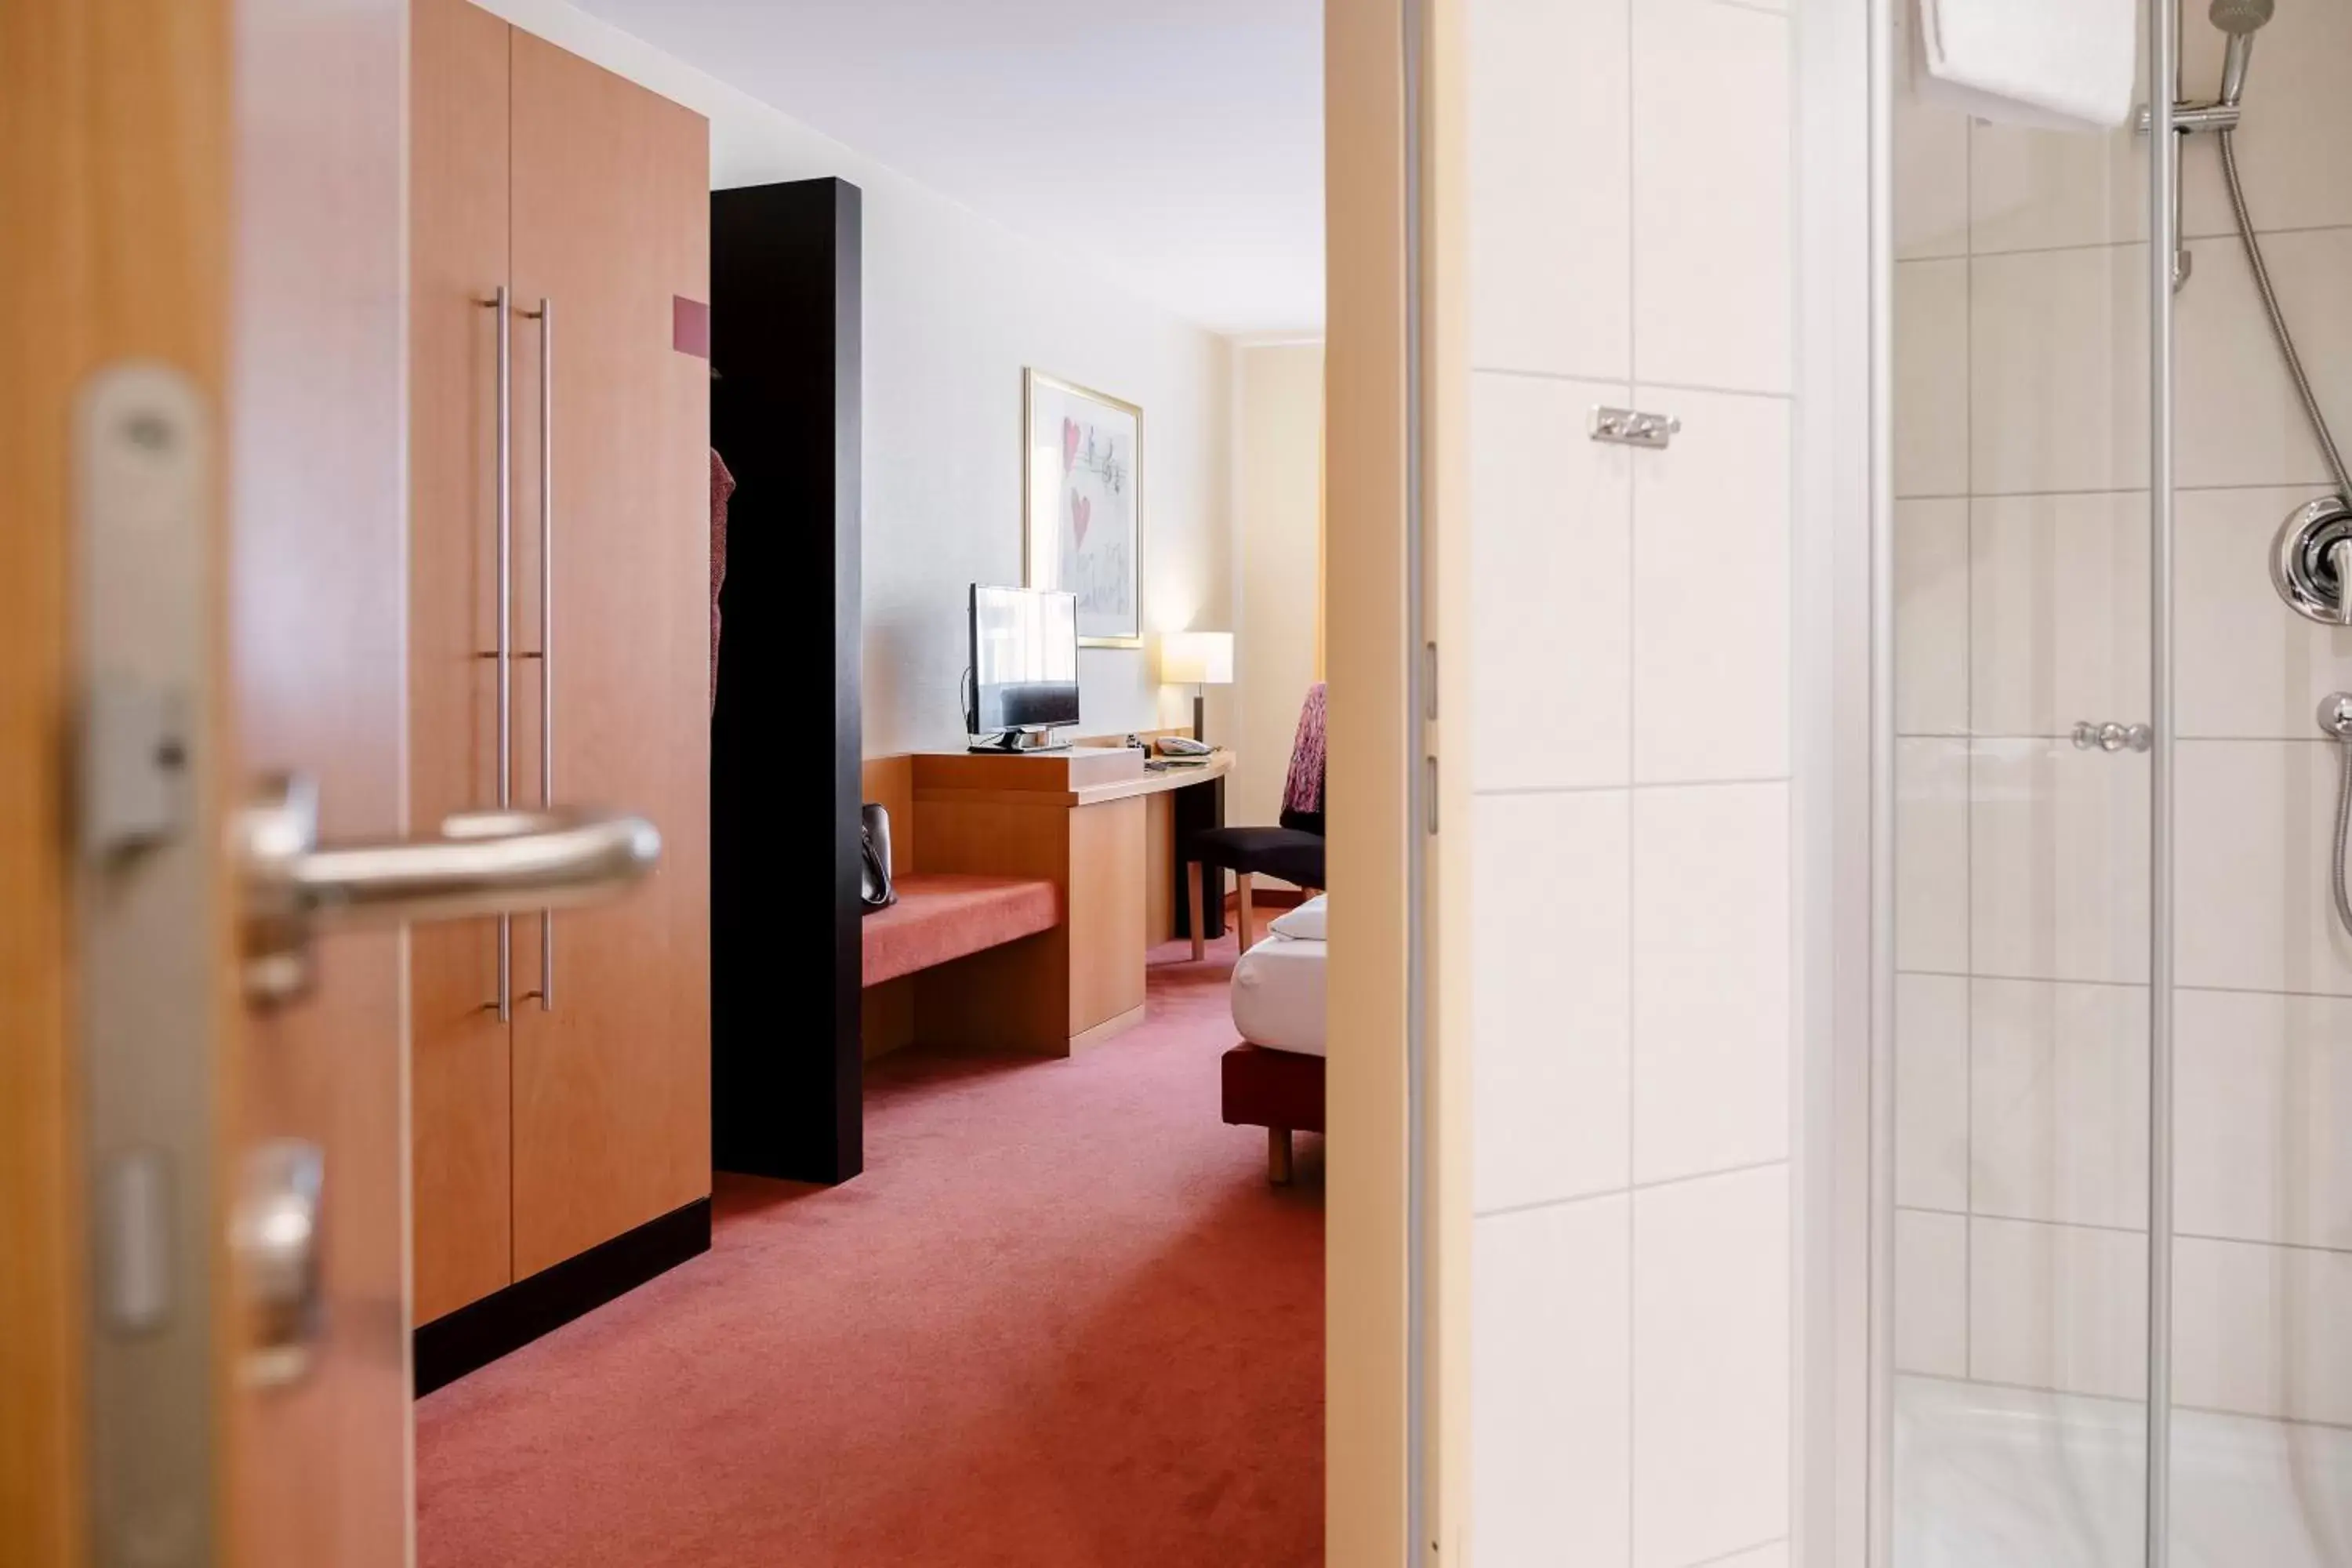 Photo of the whole room, Bathroom in Hotel am Jungfernstieg